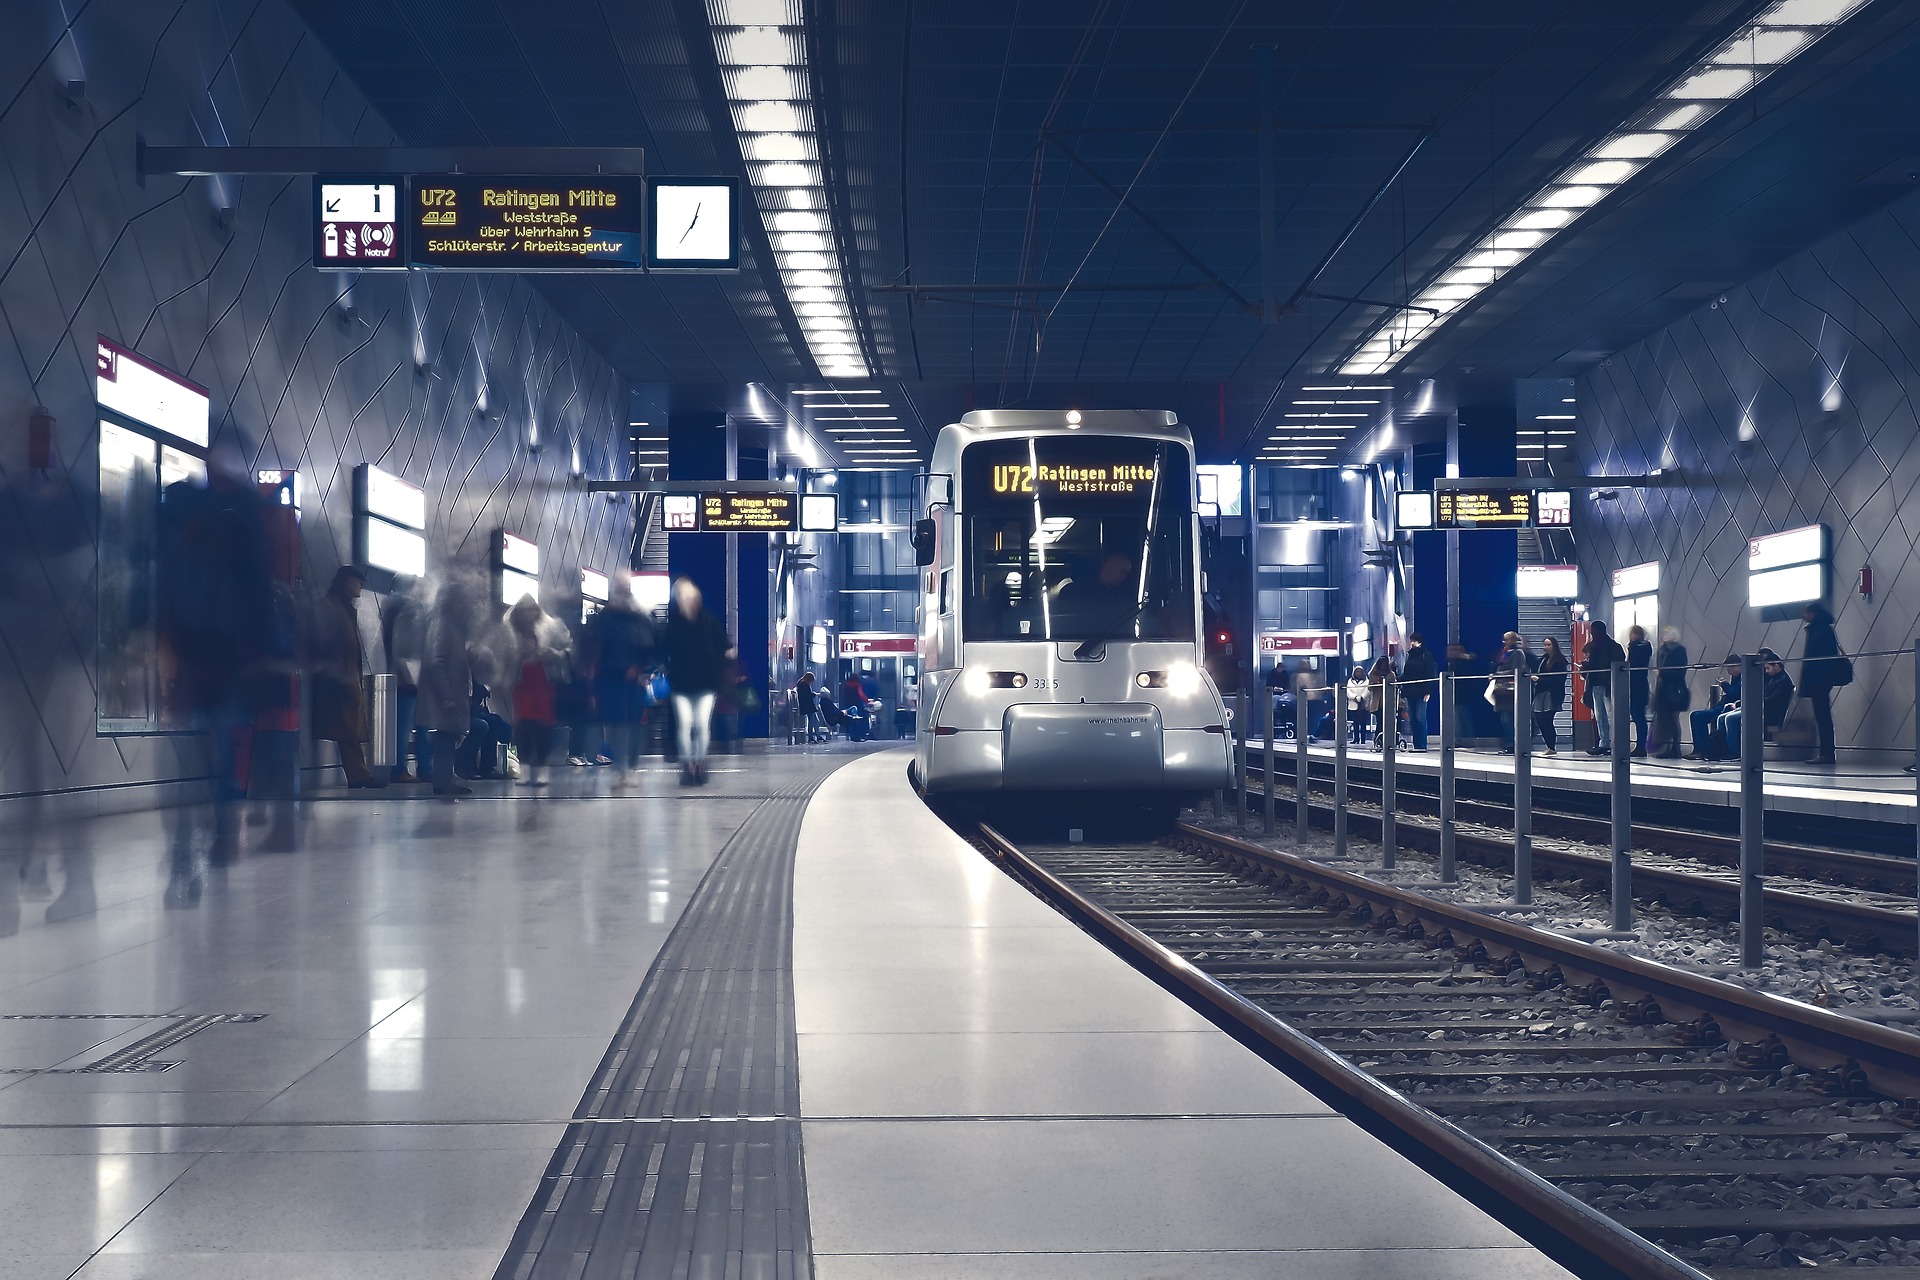 Московский метрополитен станет в два раза длиннее к 2027 году